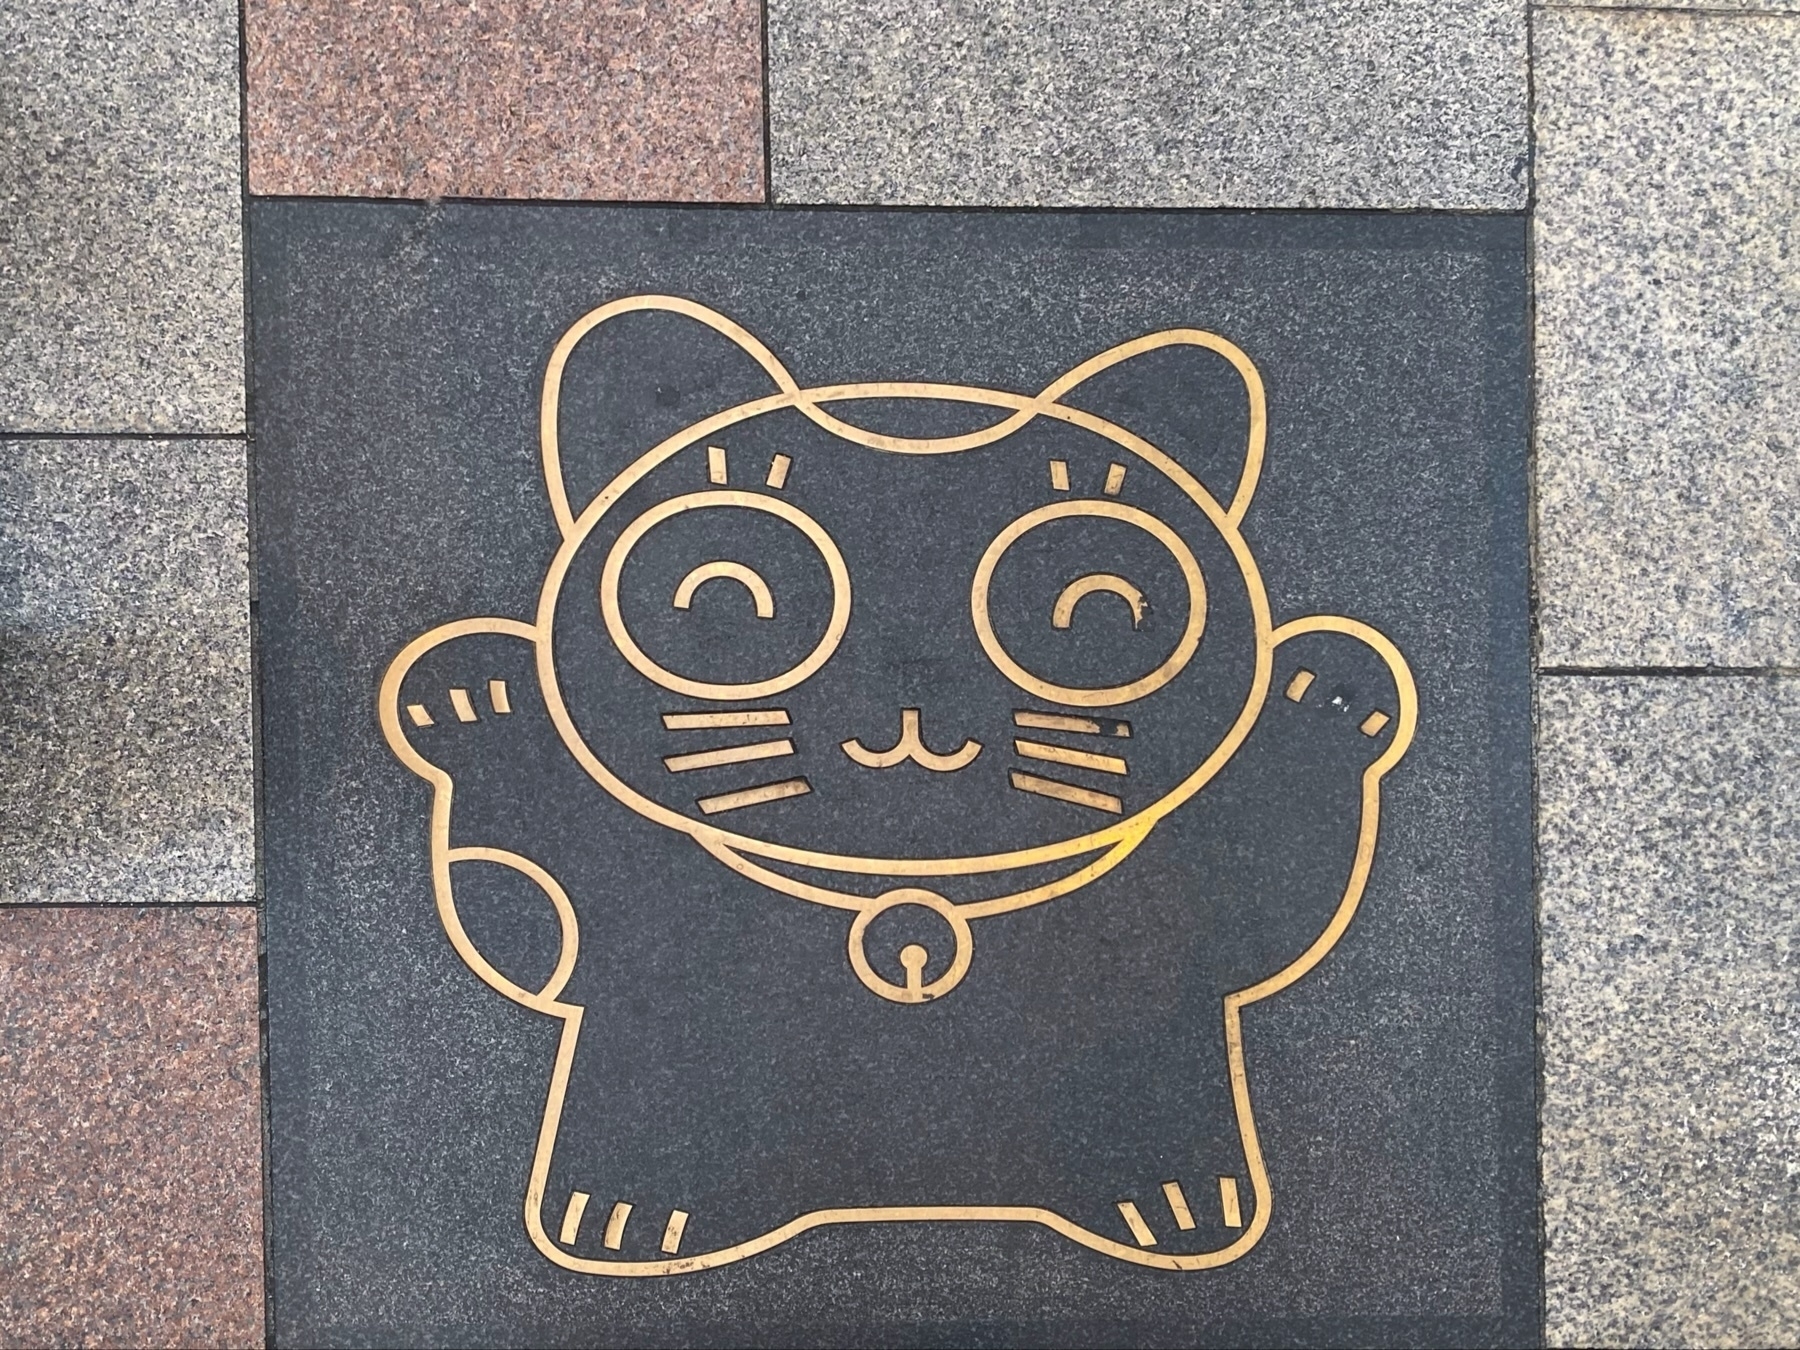 A maneki-neko (beckoning cat) design embedded in a pavement tile.